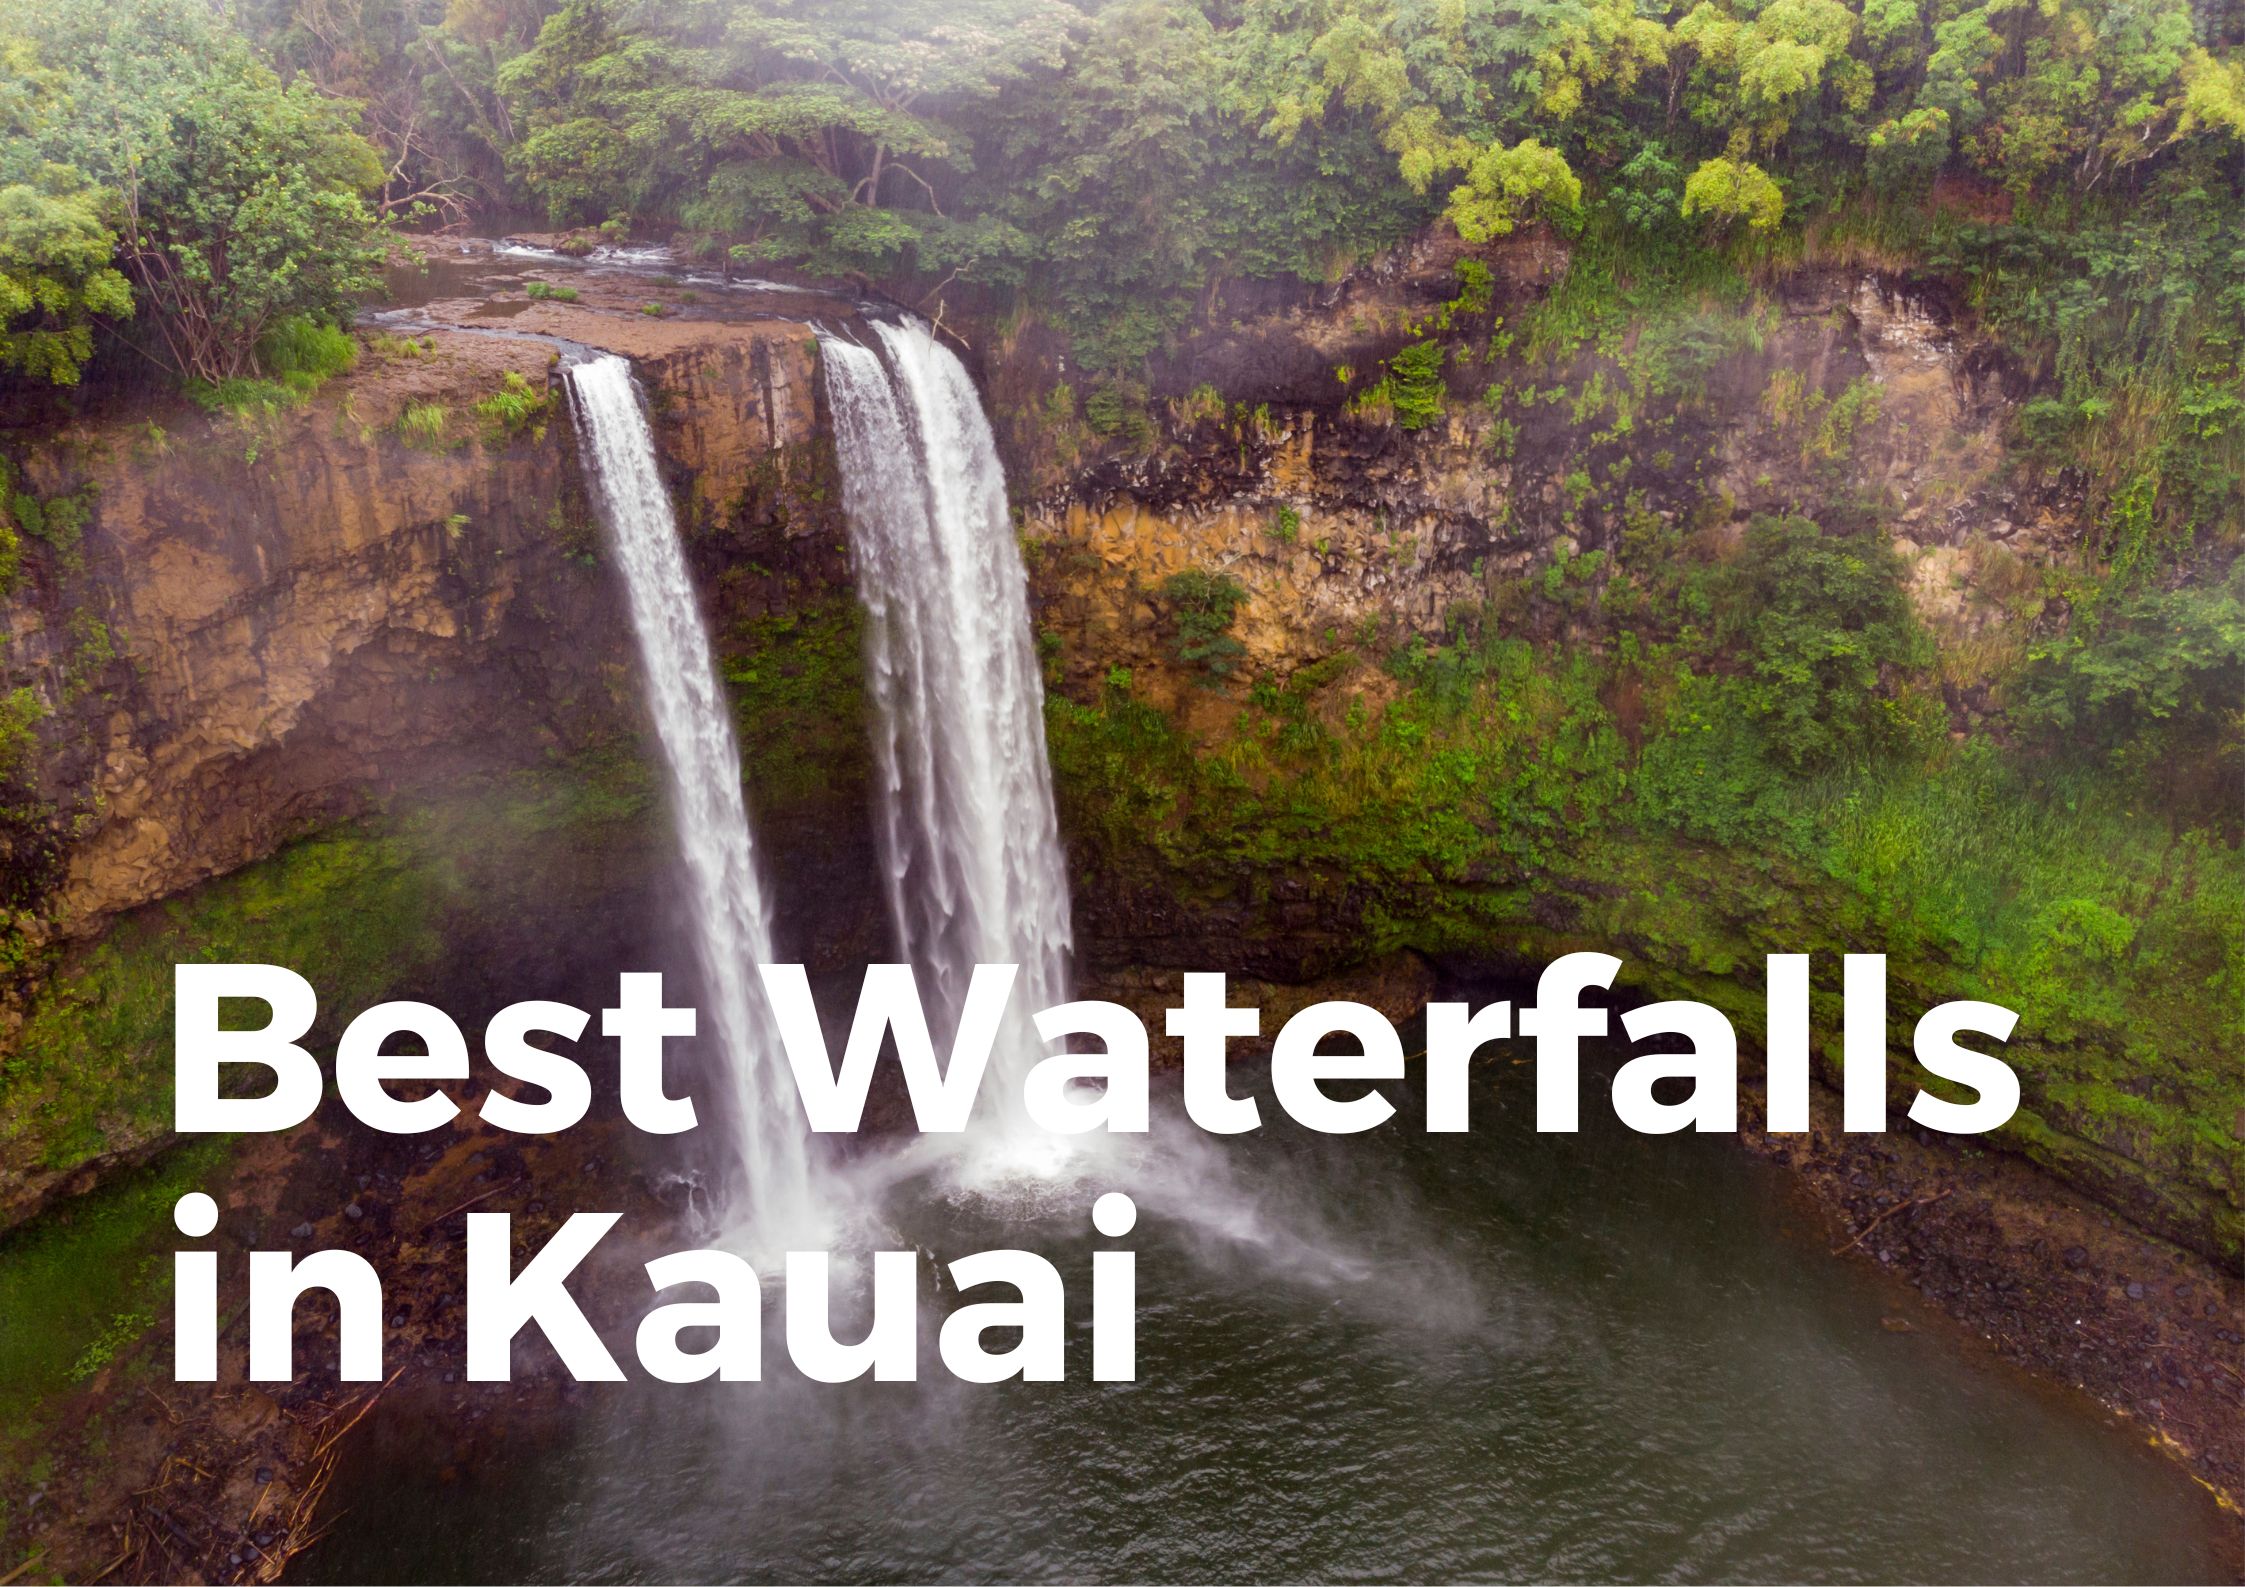 Best waterfalls in Kauai